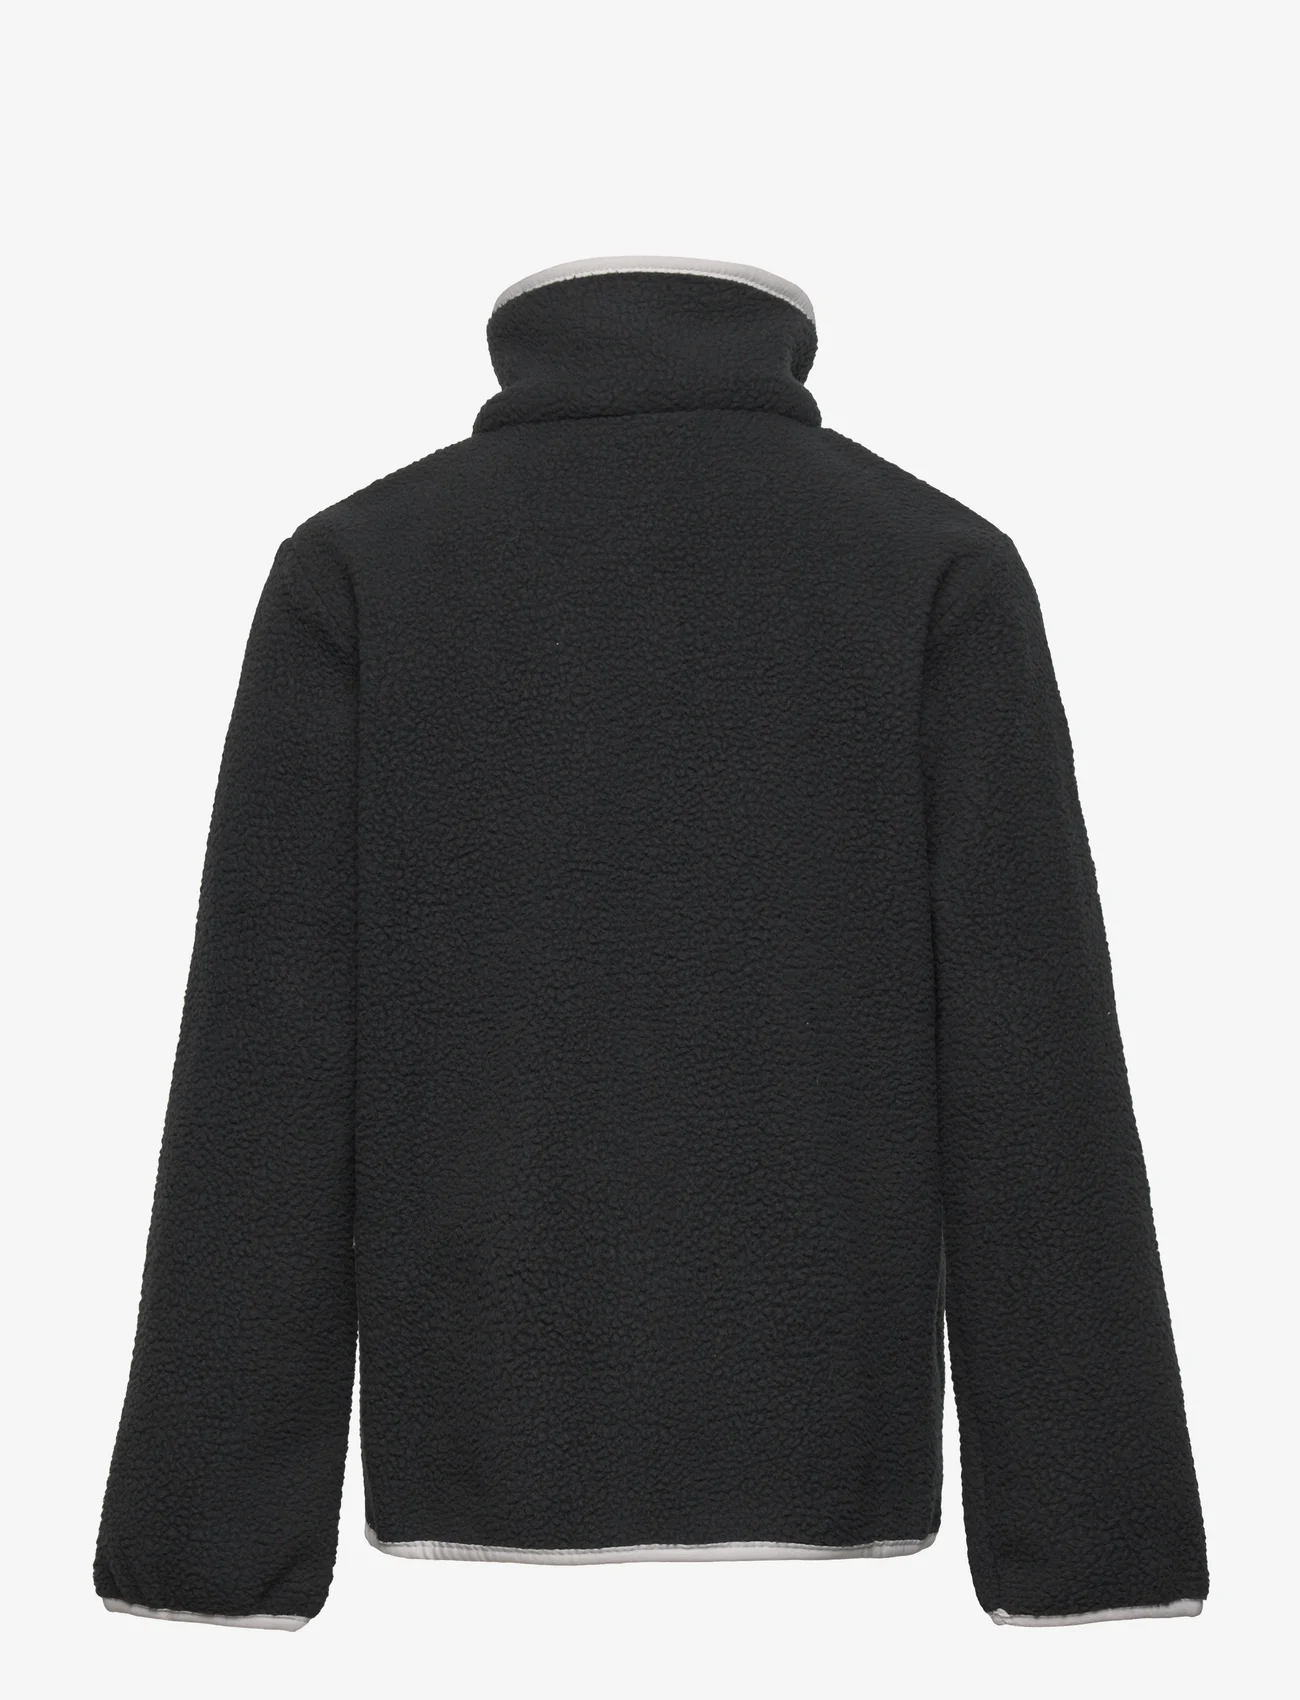 Columbia Sportswear - Helvetia Half Snap Fleece - fleecejacke - black, city grey - 1